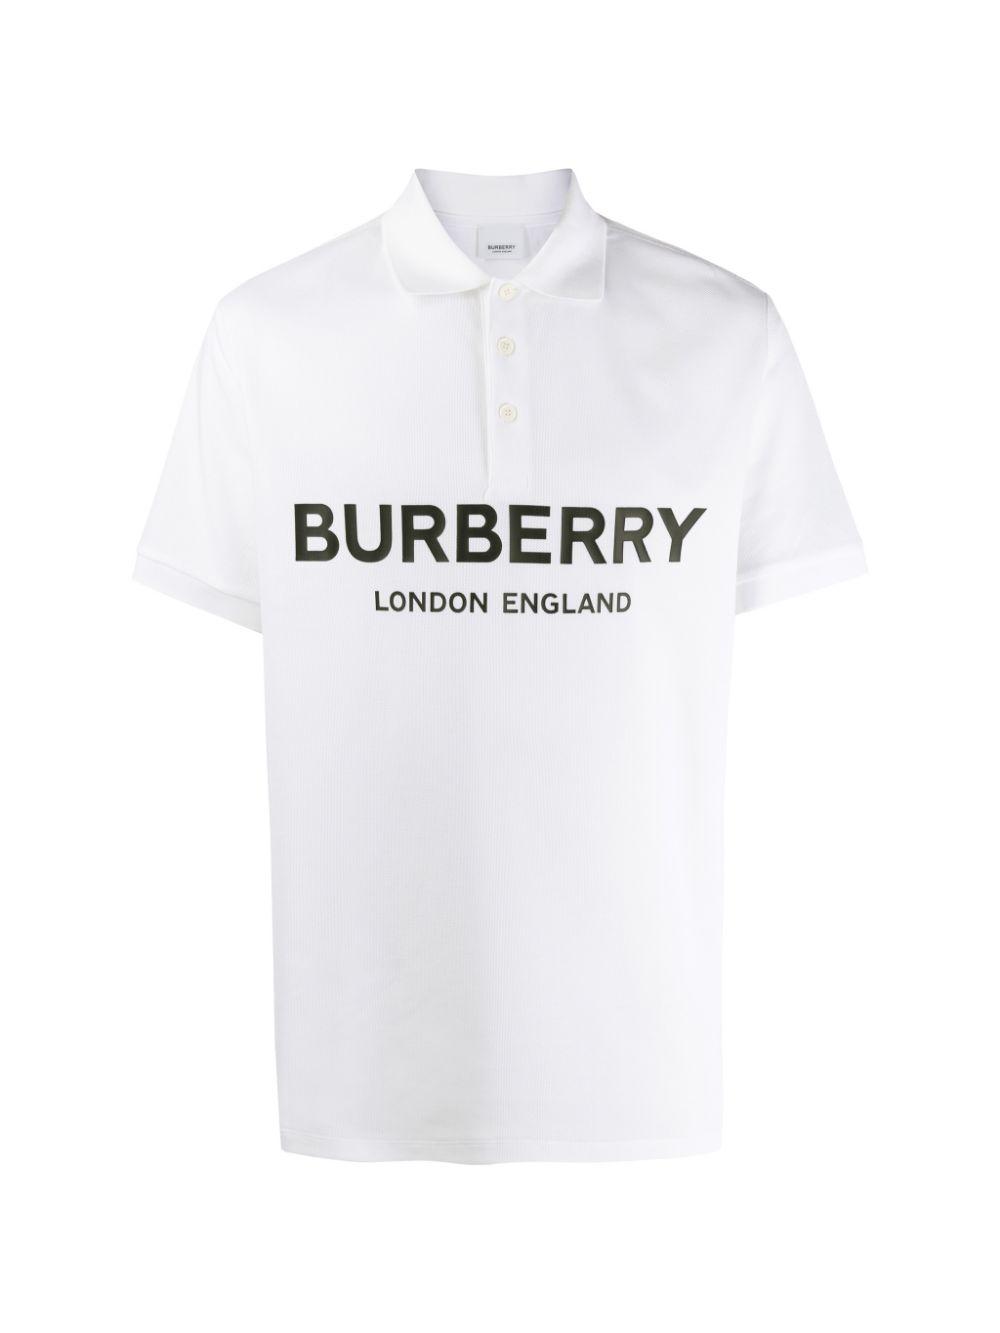 burberry london england polo